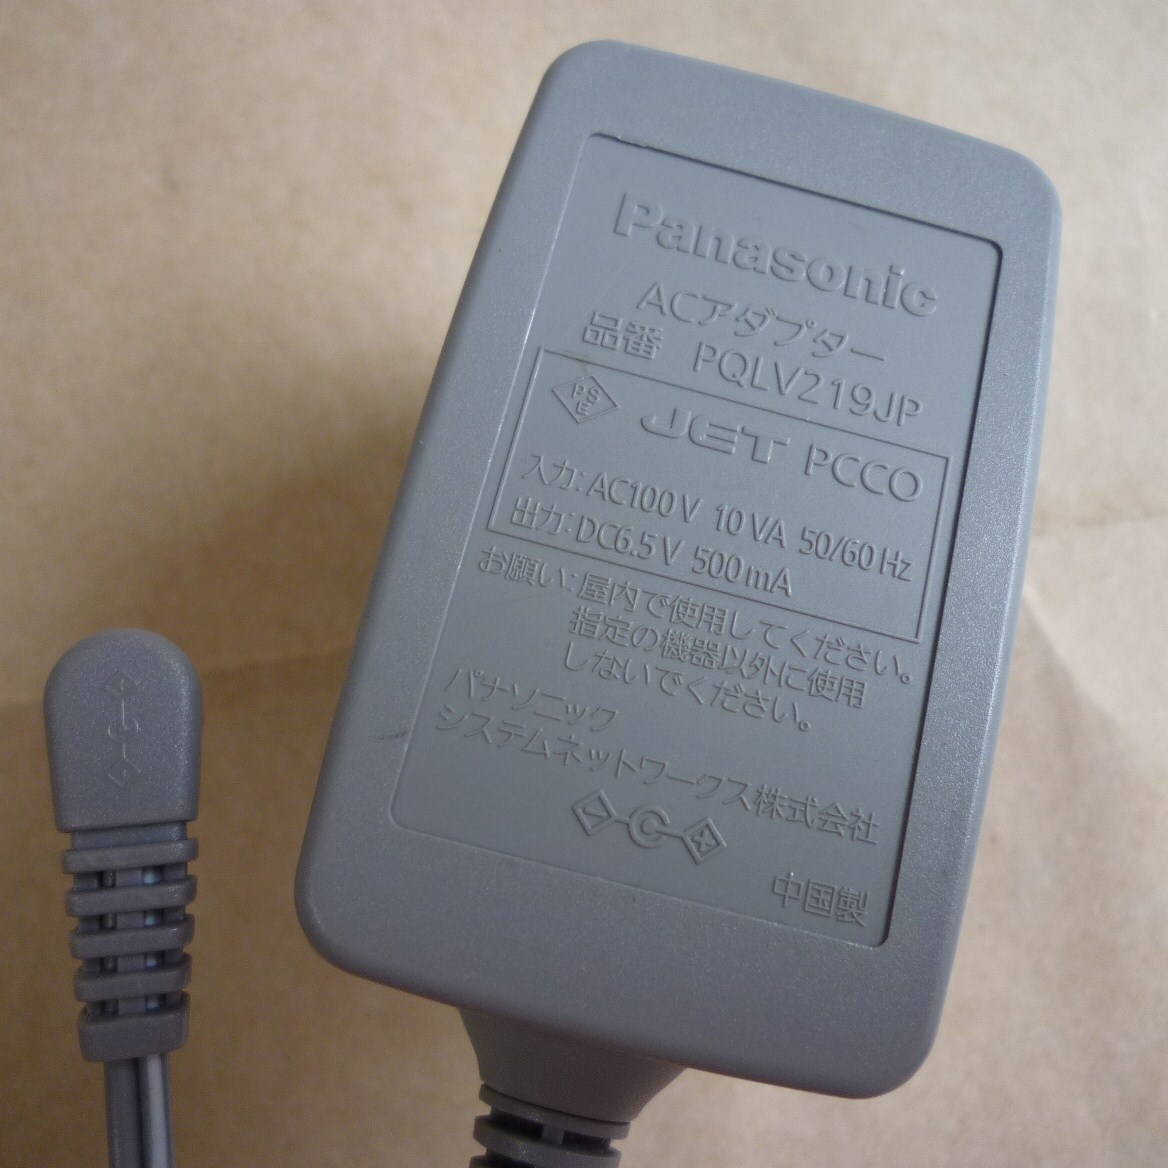 Panasonic Panasonic AC адаптер PQLV219JP 6.5V 500mA 0.5A беспроводной телефонный аппарат для зарядка для телефонный аппарат для беспроводной ho n②③